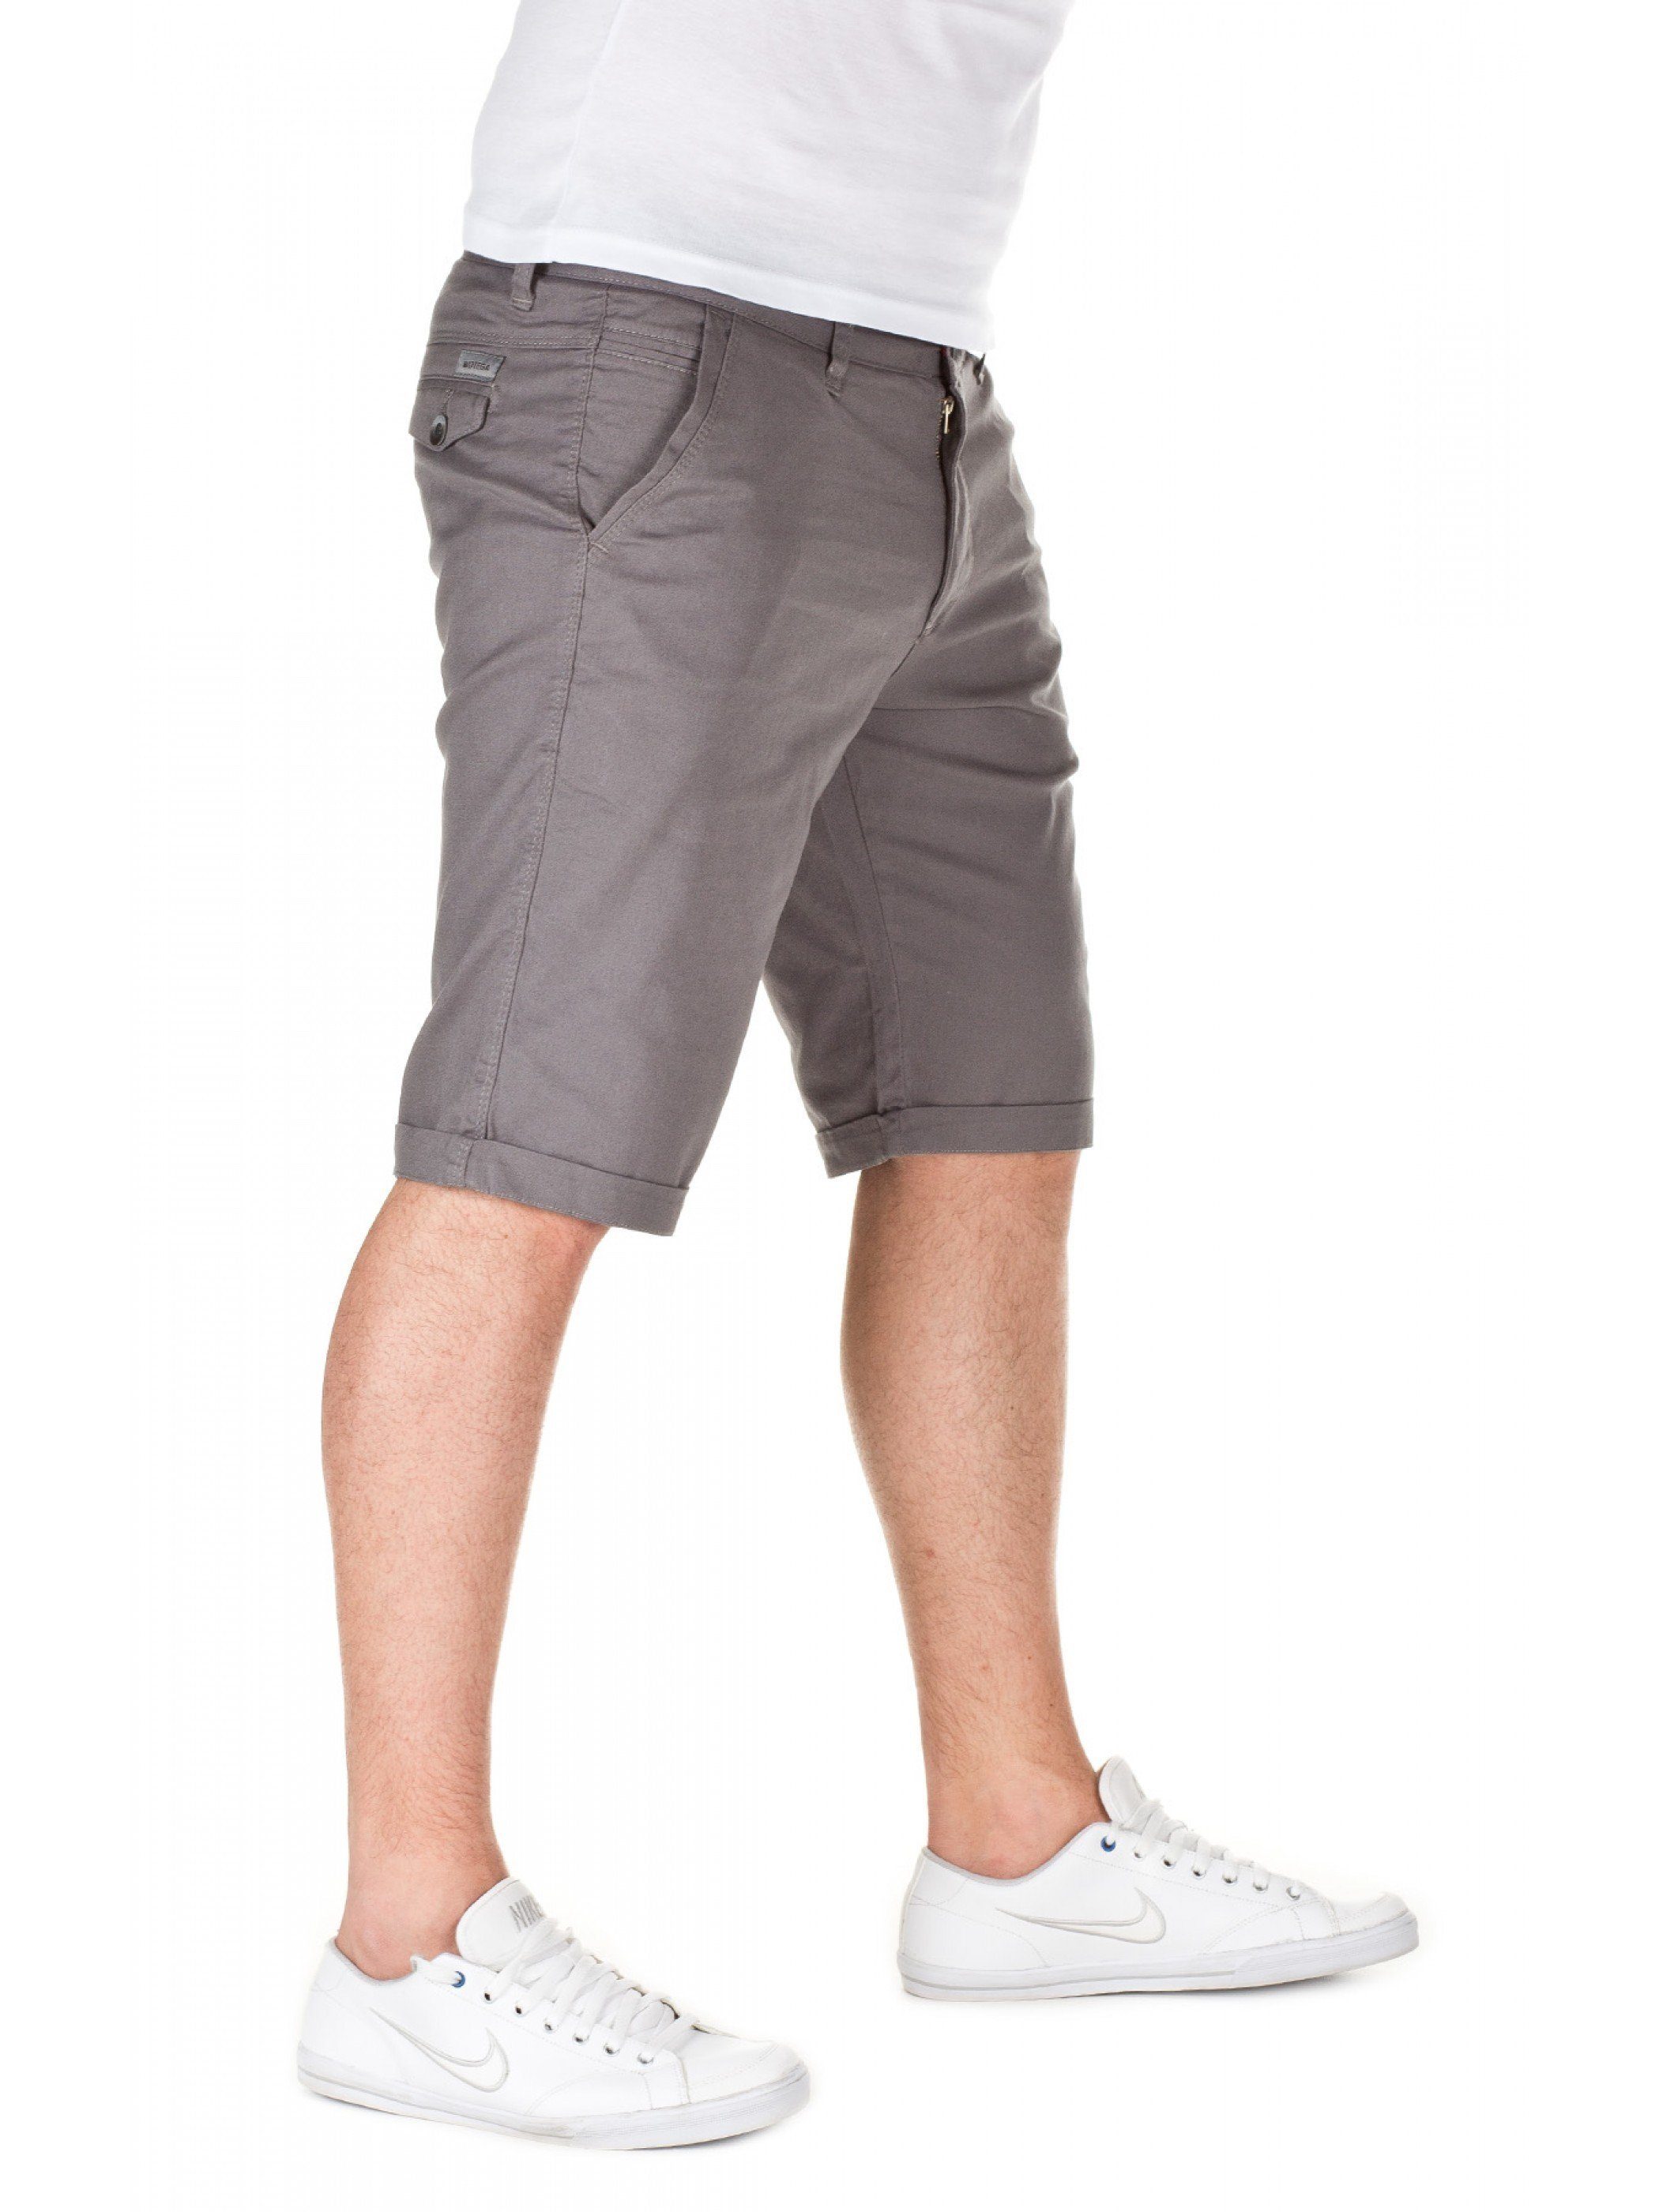 WOTEGA Shorts in shorts Unifarbe (grey - Chino Grau WOTEGA 4236) Alex